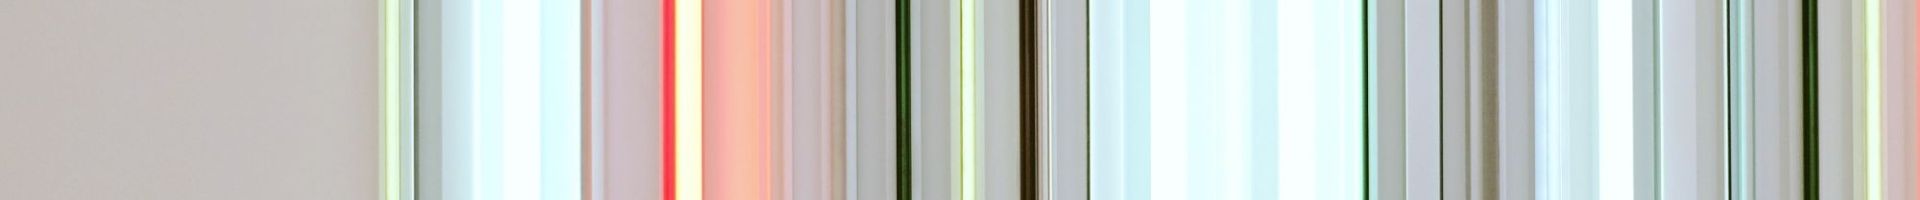 lucent™ - illuminated fabric systems